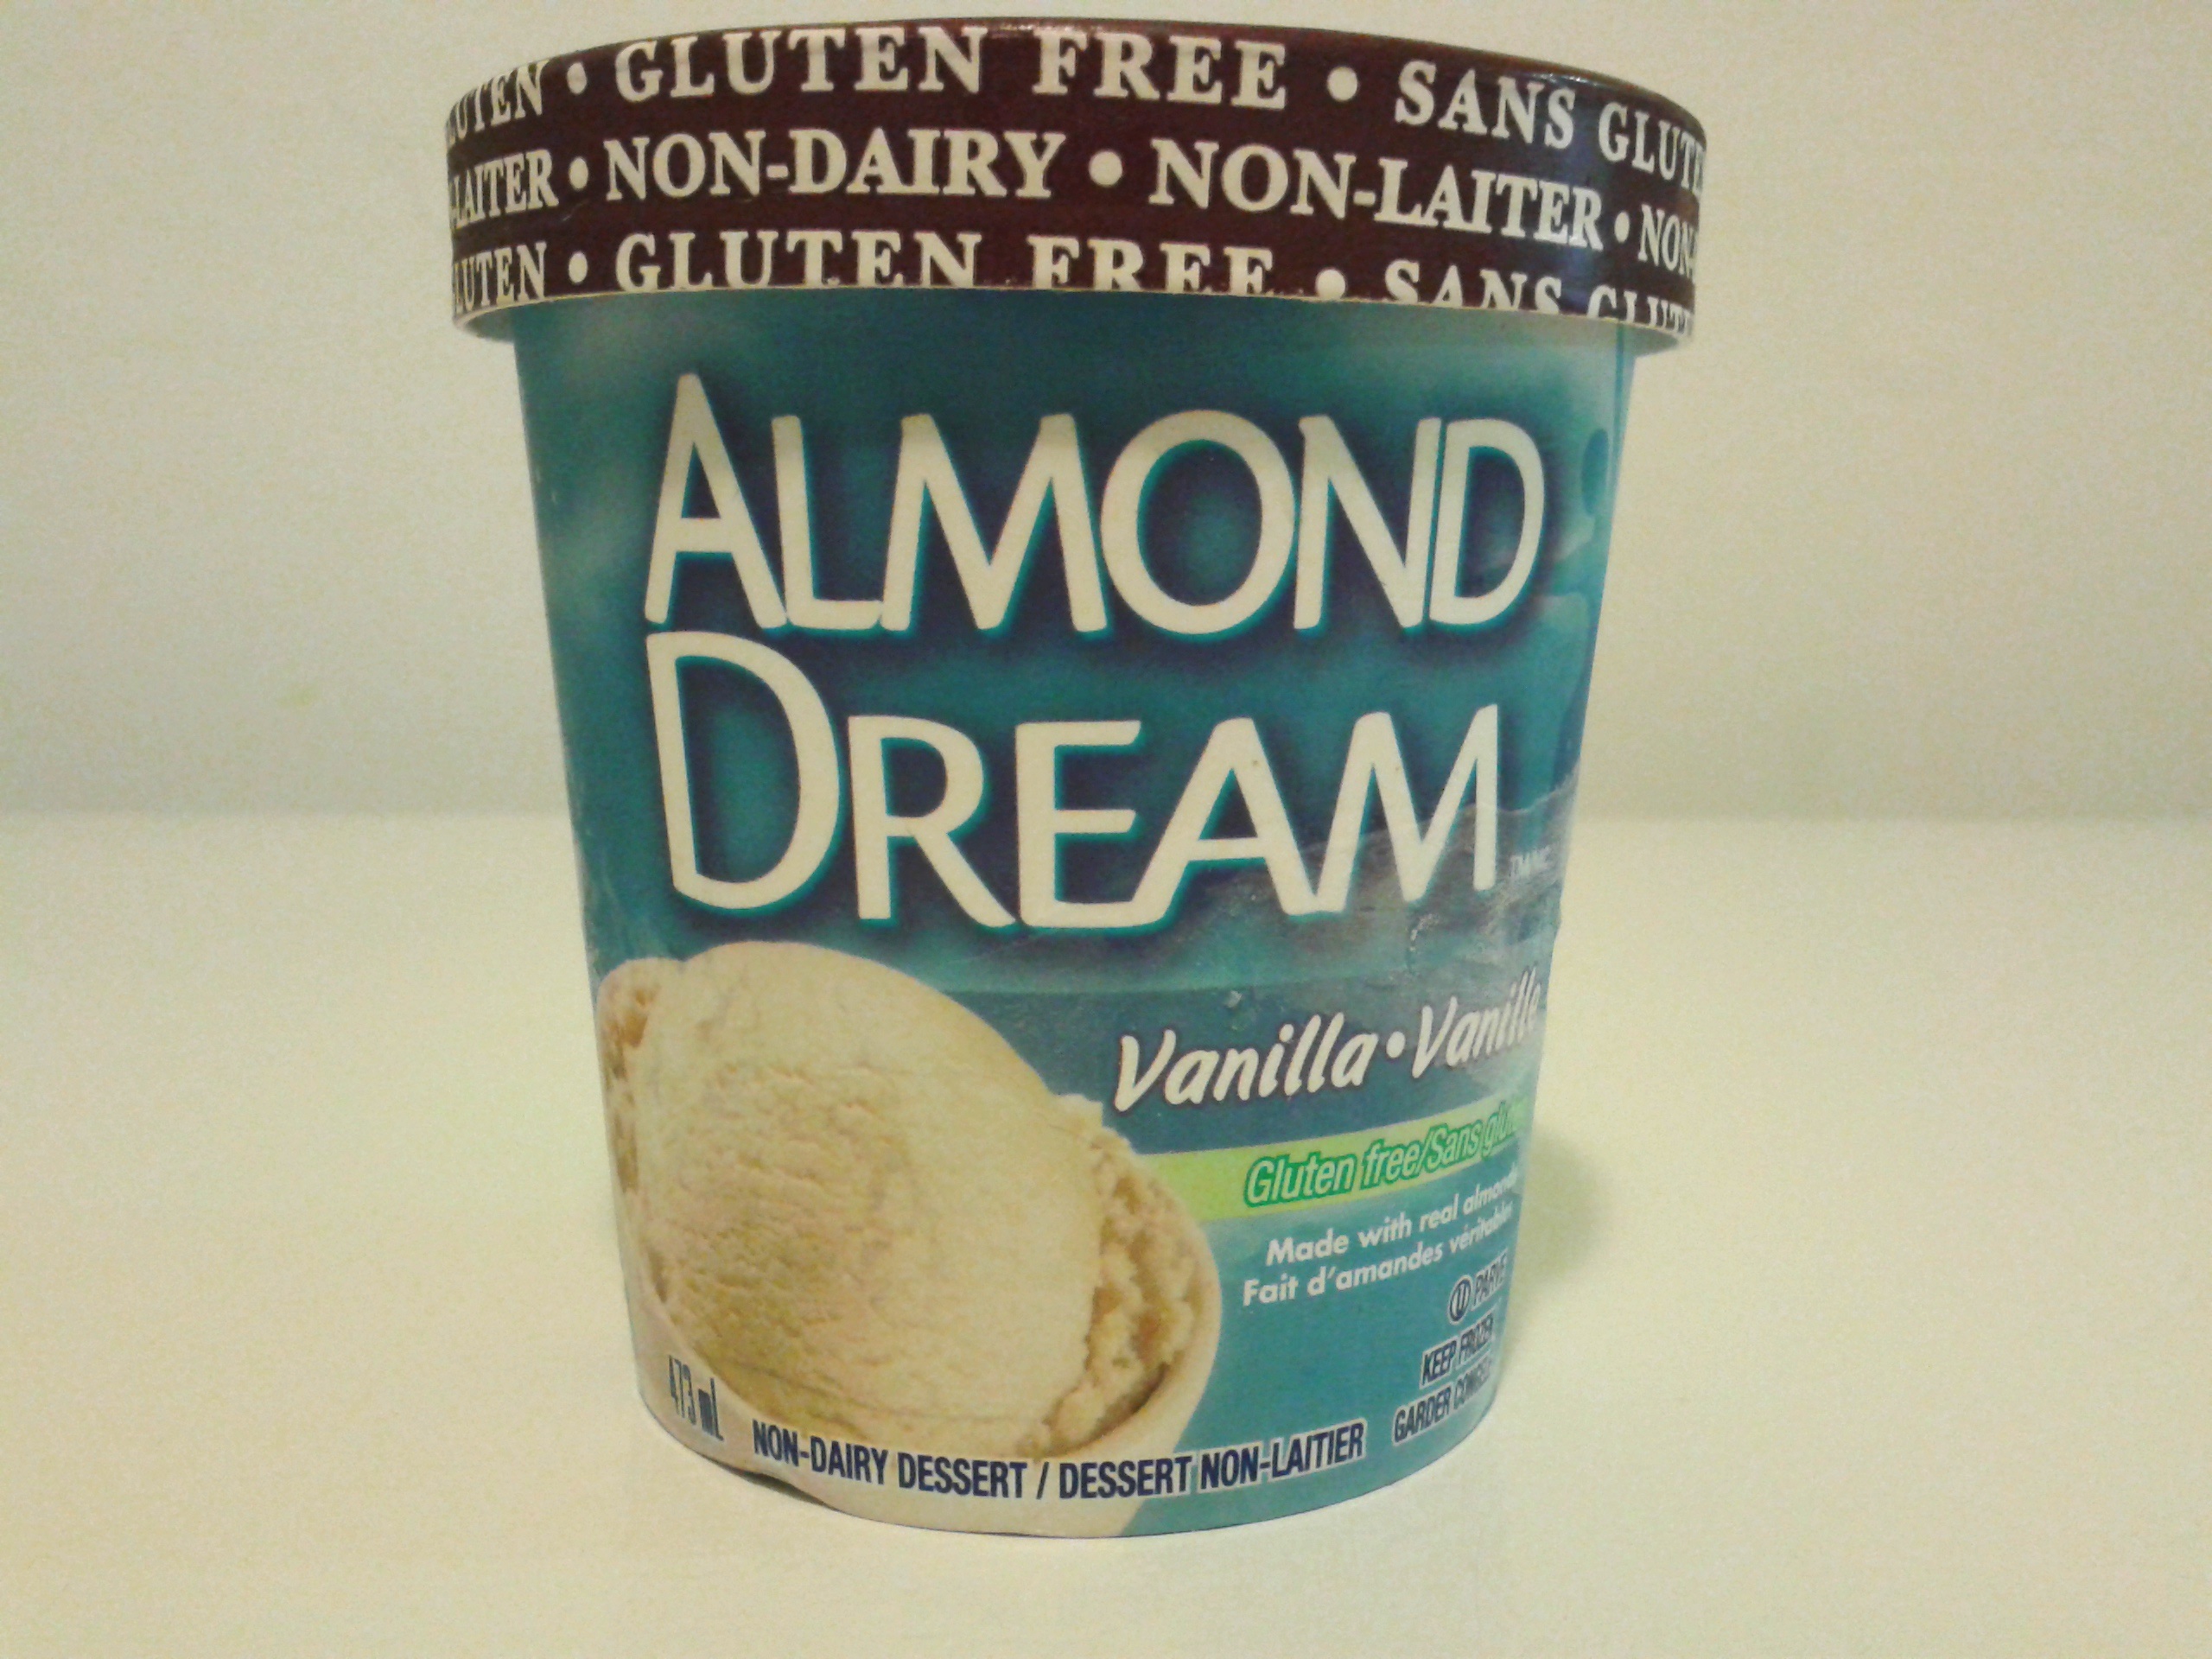 crème glacée almond dream - vanille